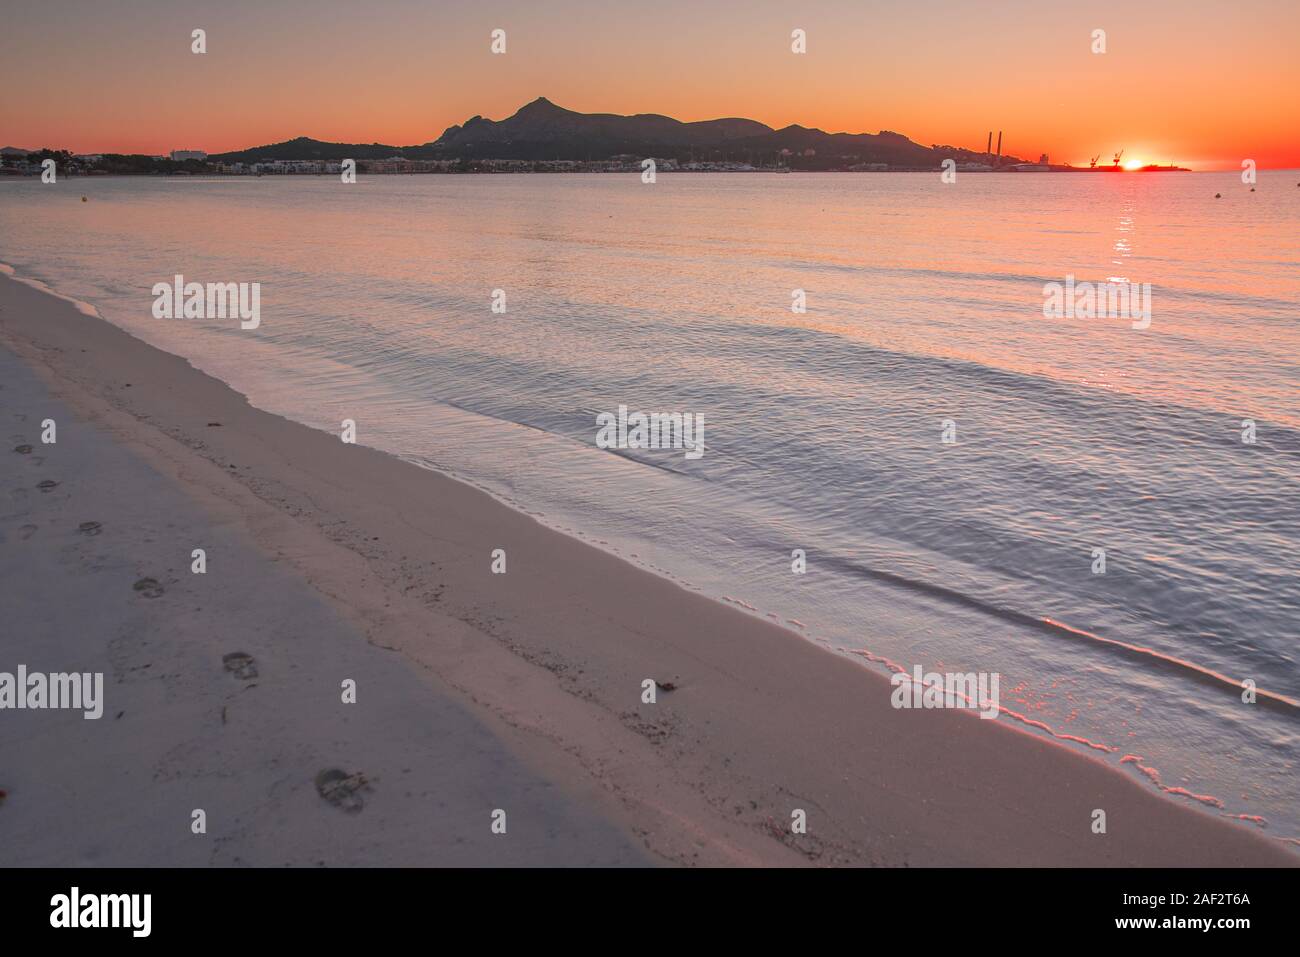 Morning by the beach. Playa de Muro, sunrise sky in background Stock Photo